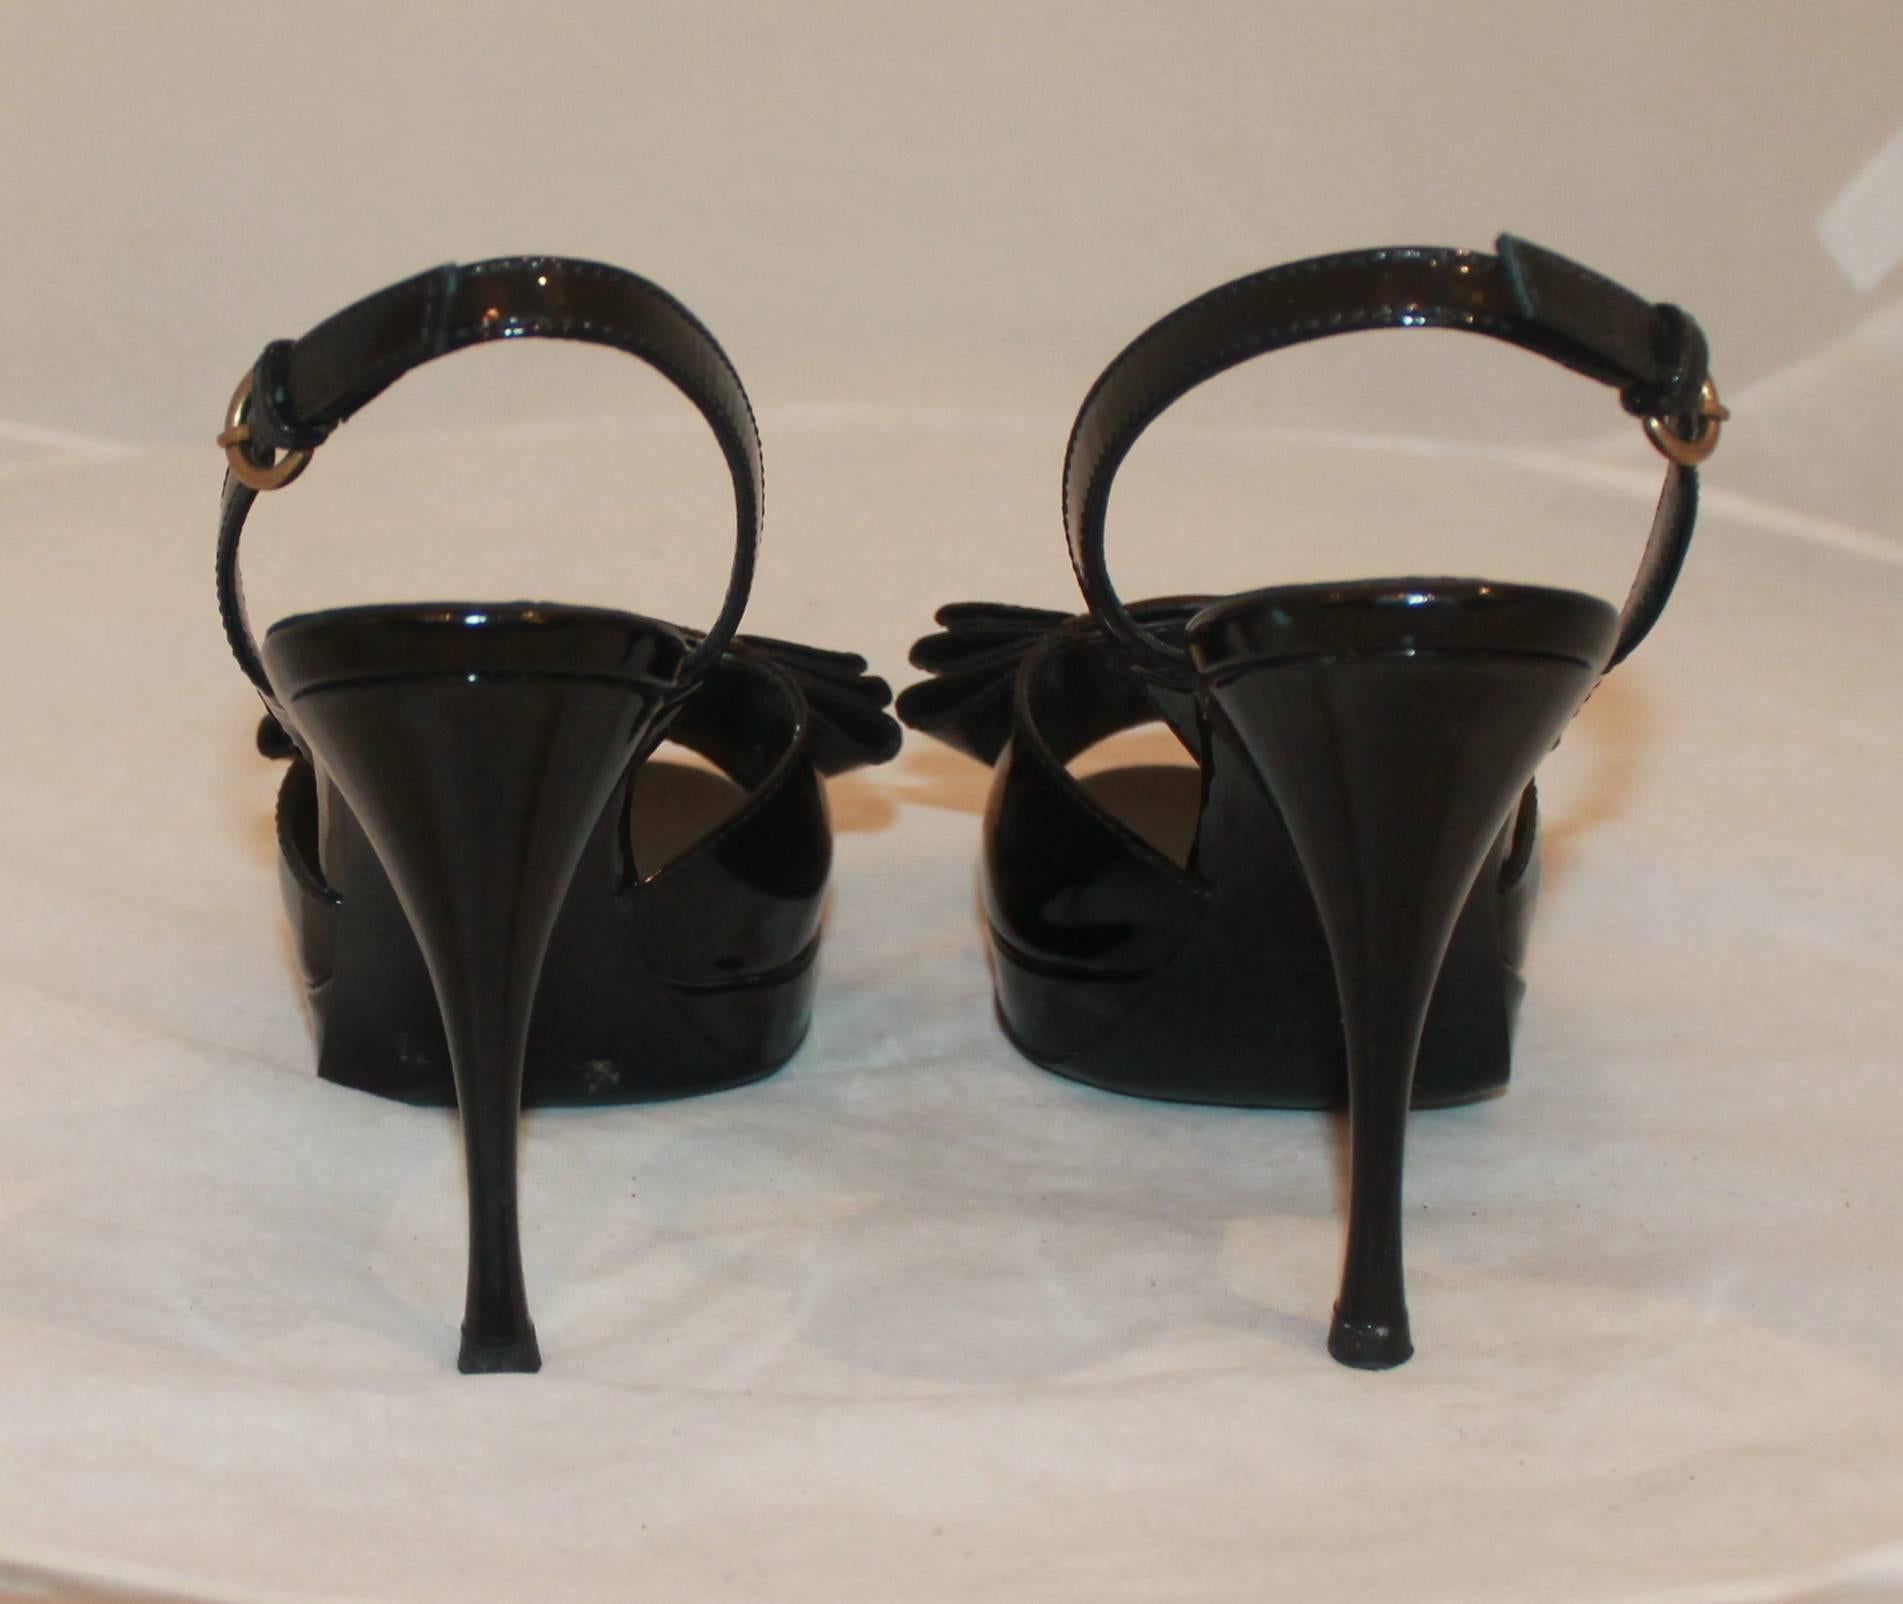 black bow platform heels